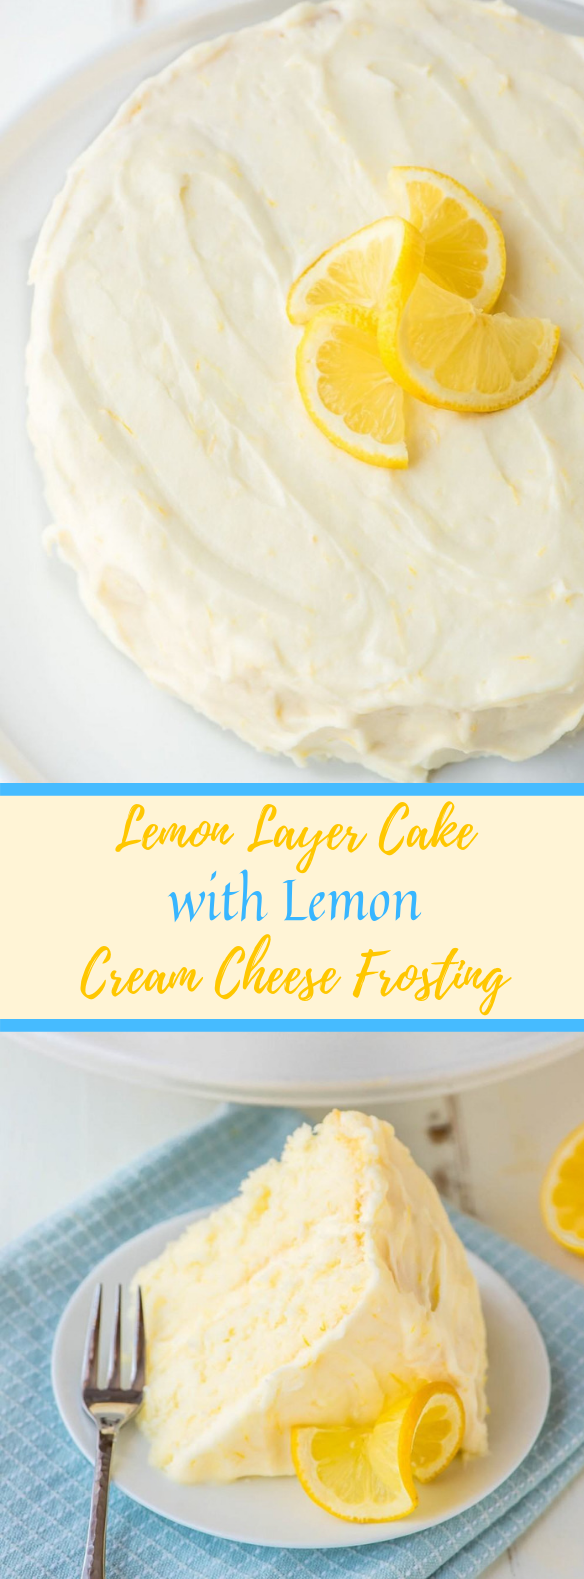 Lemon Layer Cake with Lemon Cream Cheese Frosting #Dessert #Homemade